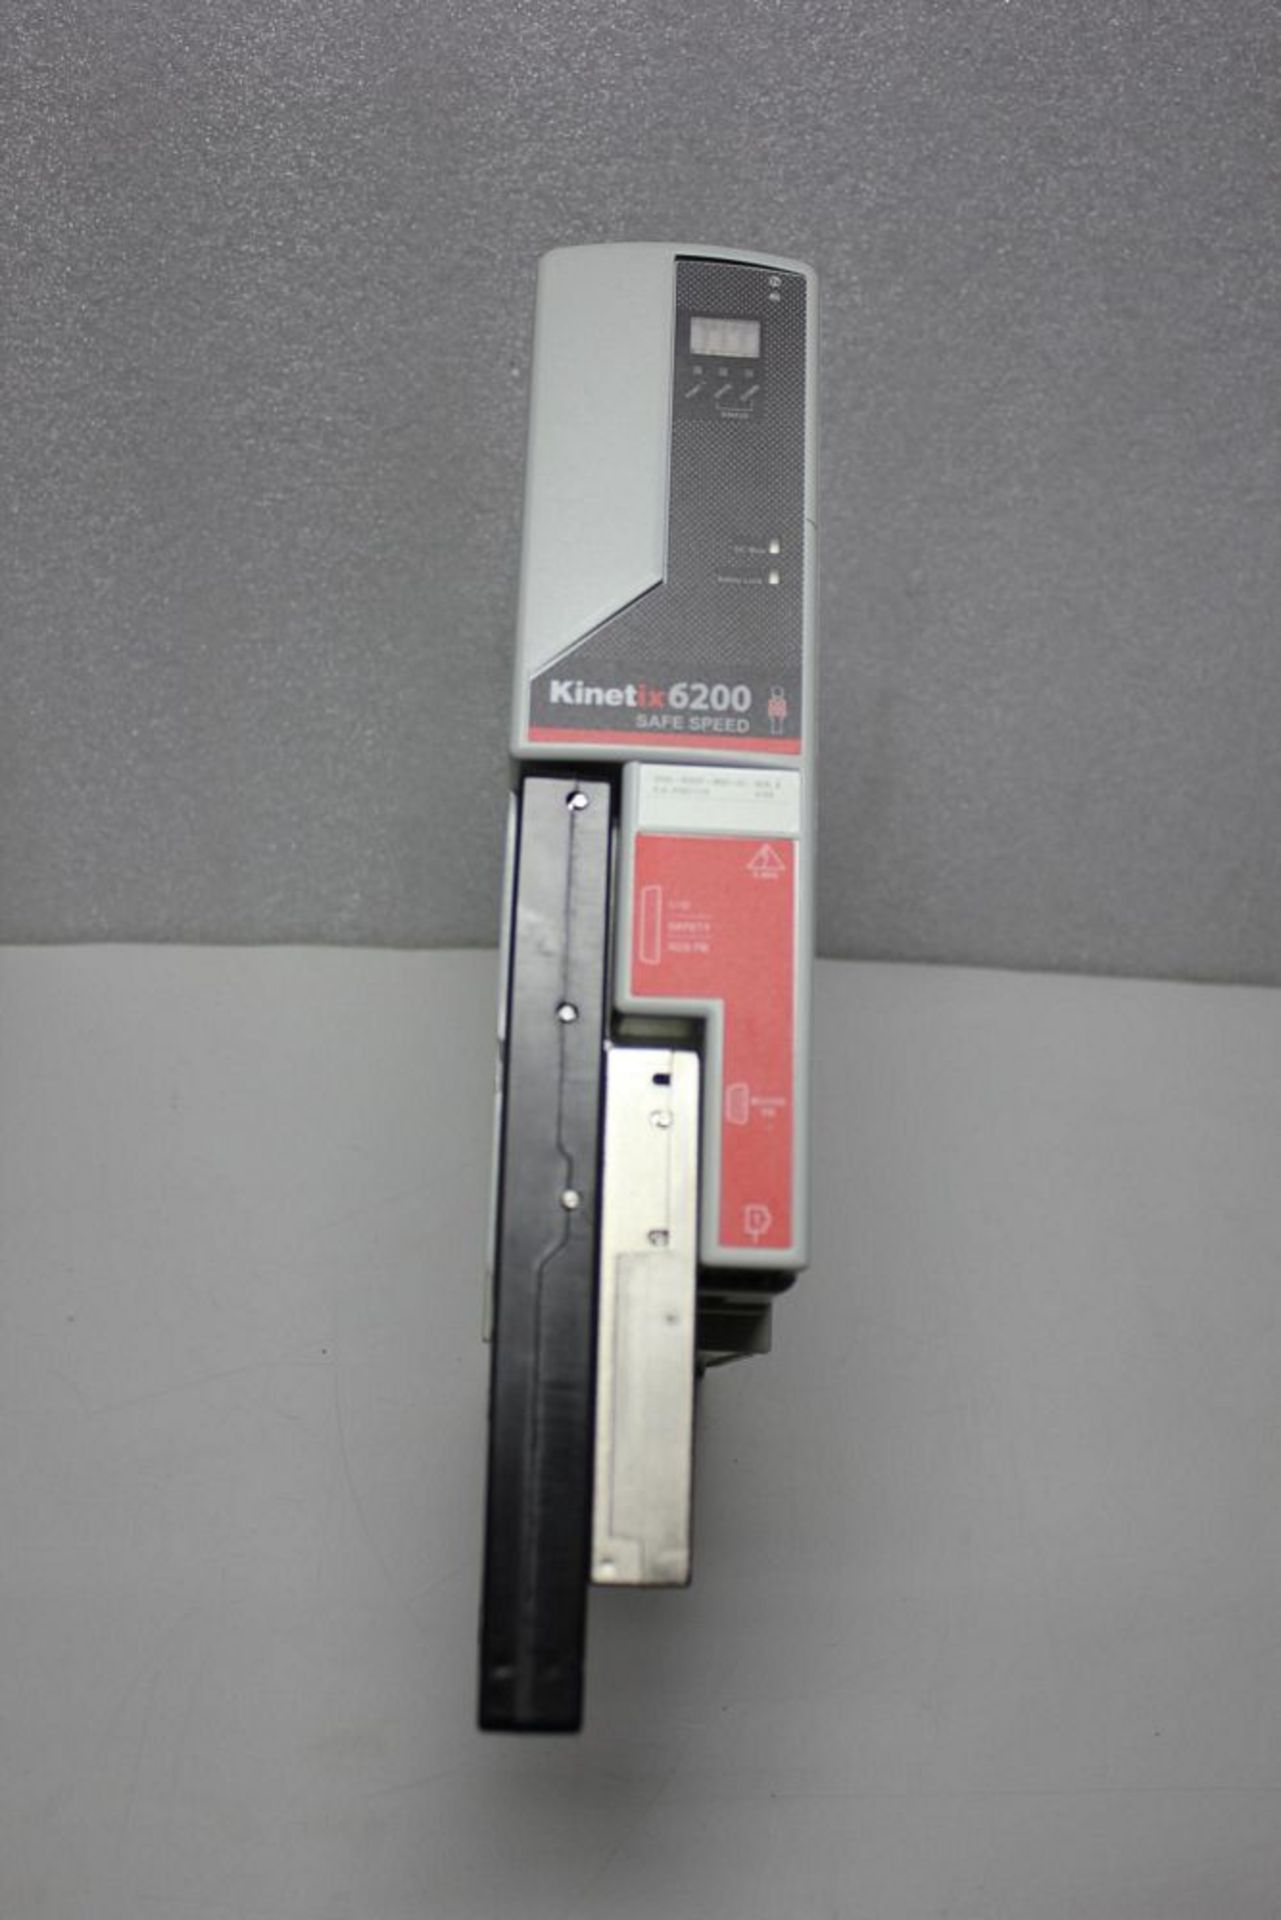 ALLEN BRADLEY KINETIX 6200 AXIS POWER MODULE & SPEED CONTROL - Image 4 of 8